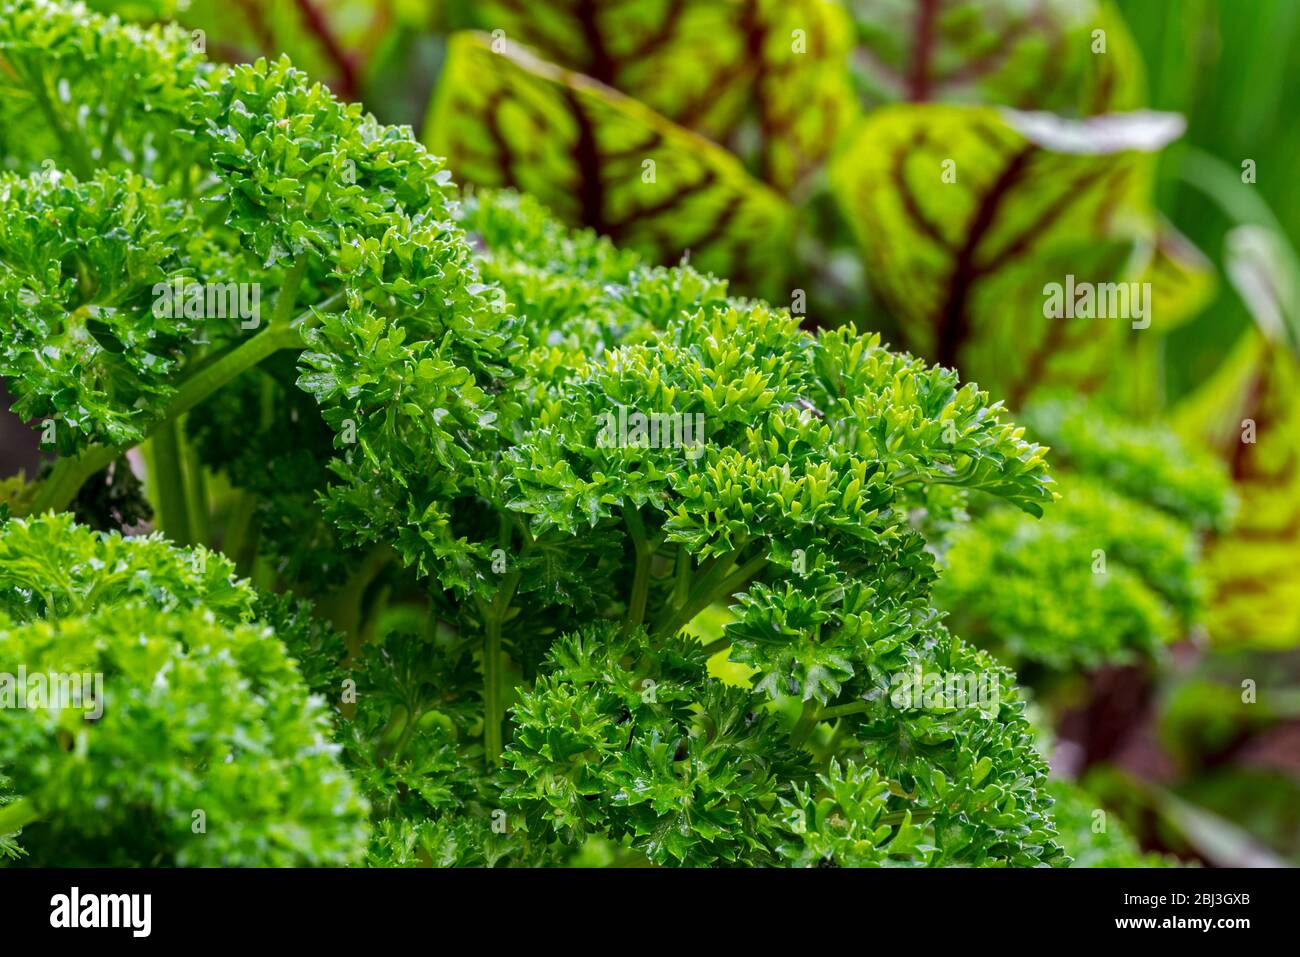 Garden parsley (Petroselinum crispum) and bloody dock / red veined dock (Rumex sanguineus) close-up of leaves Stock Photo